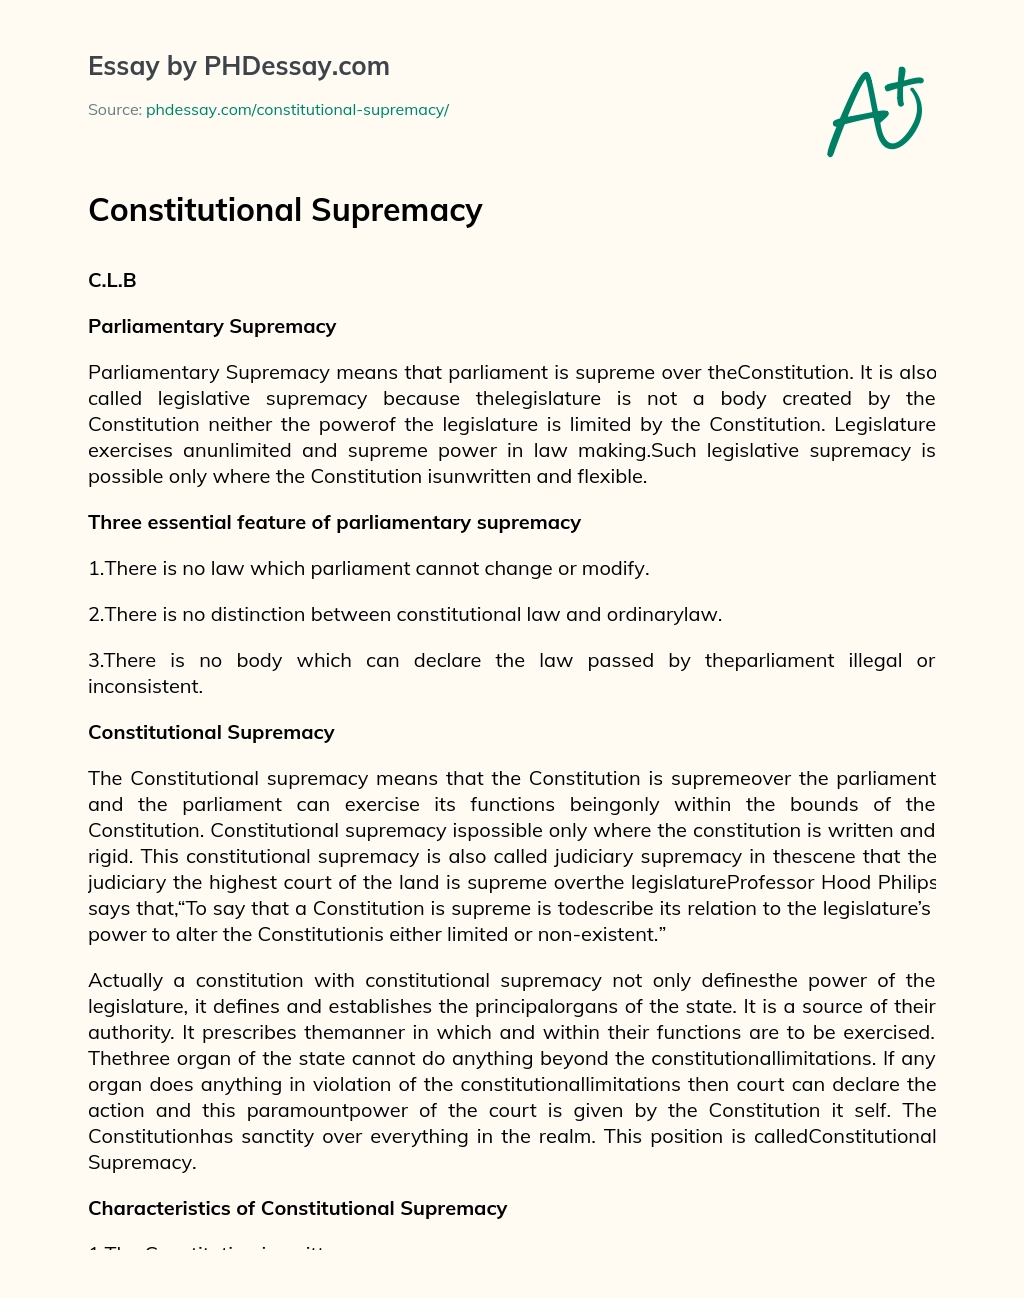 Constitutional Supremacy essay